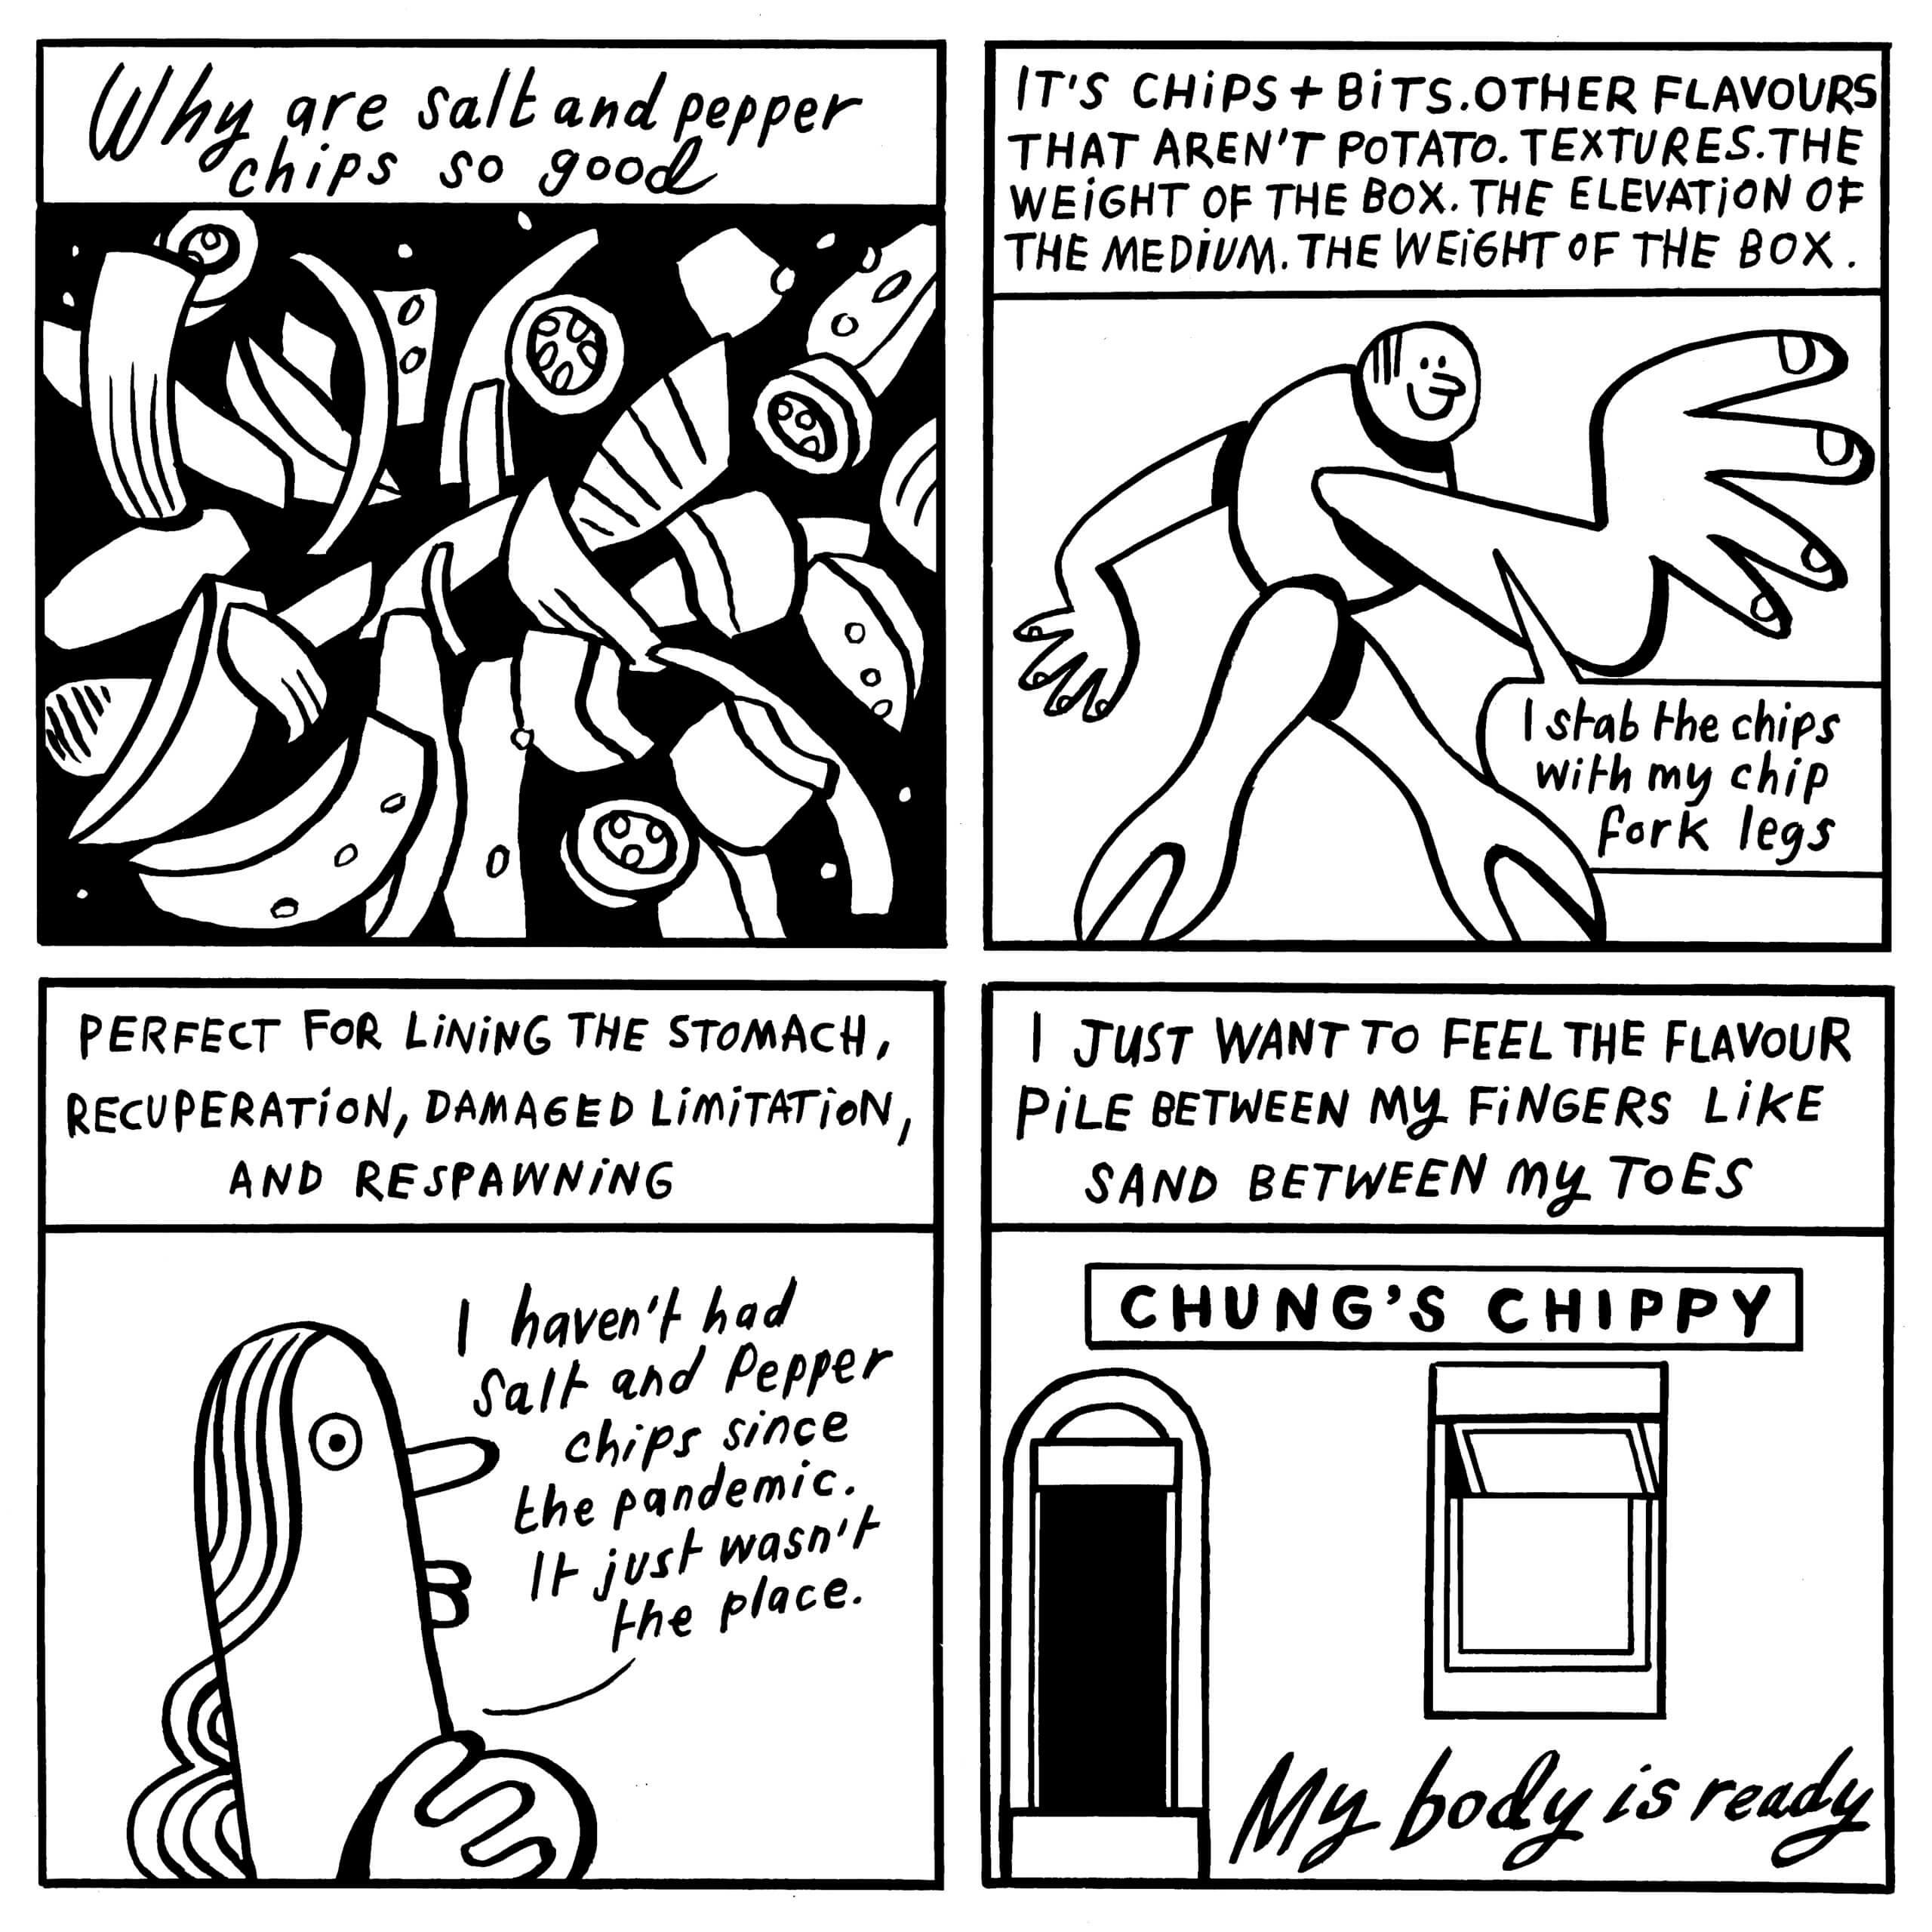 David Bailey's Chung's Chippy comic strip